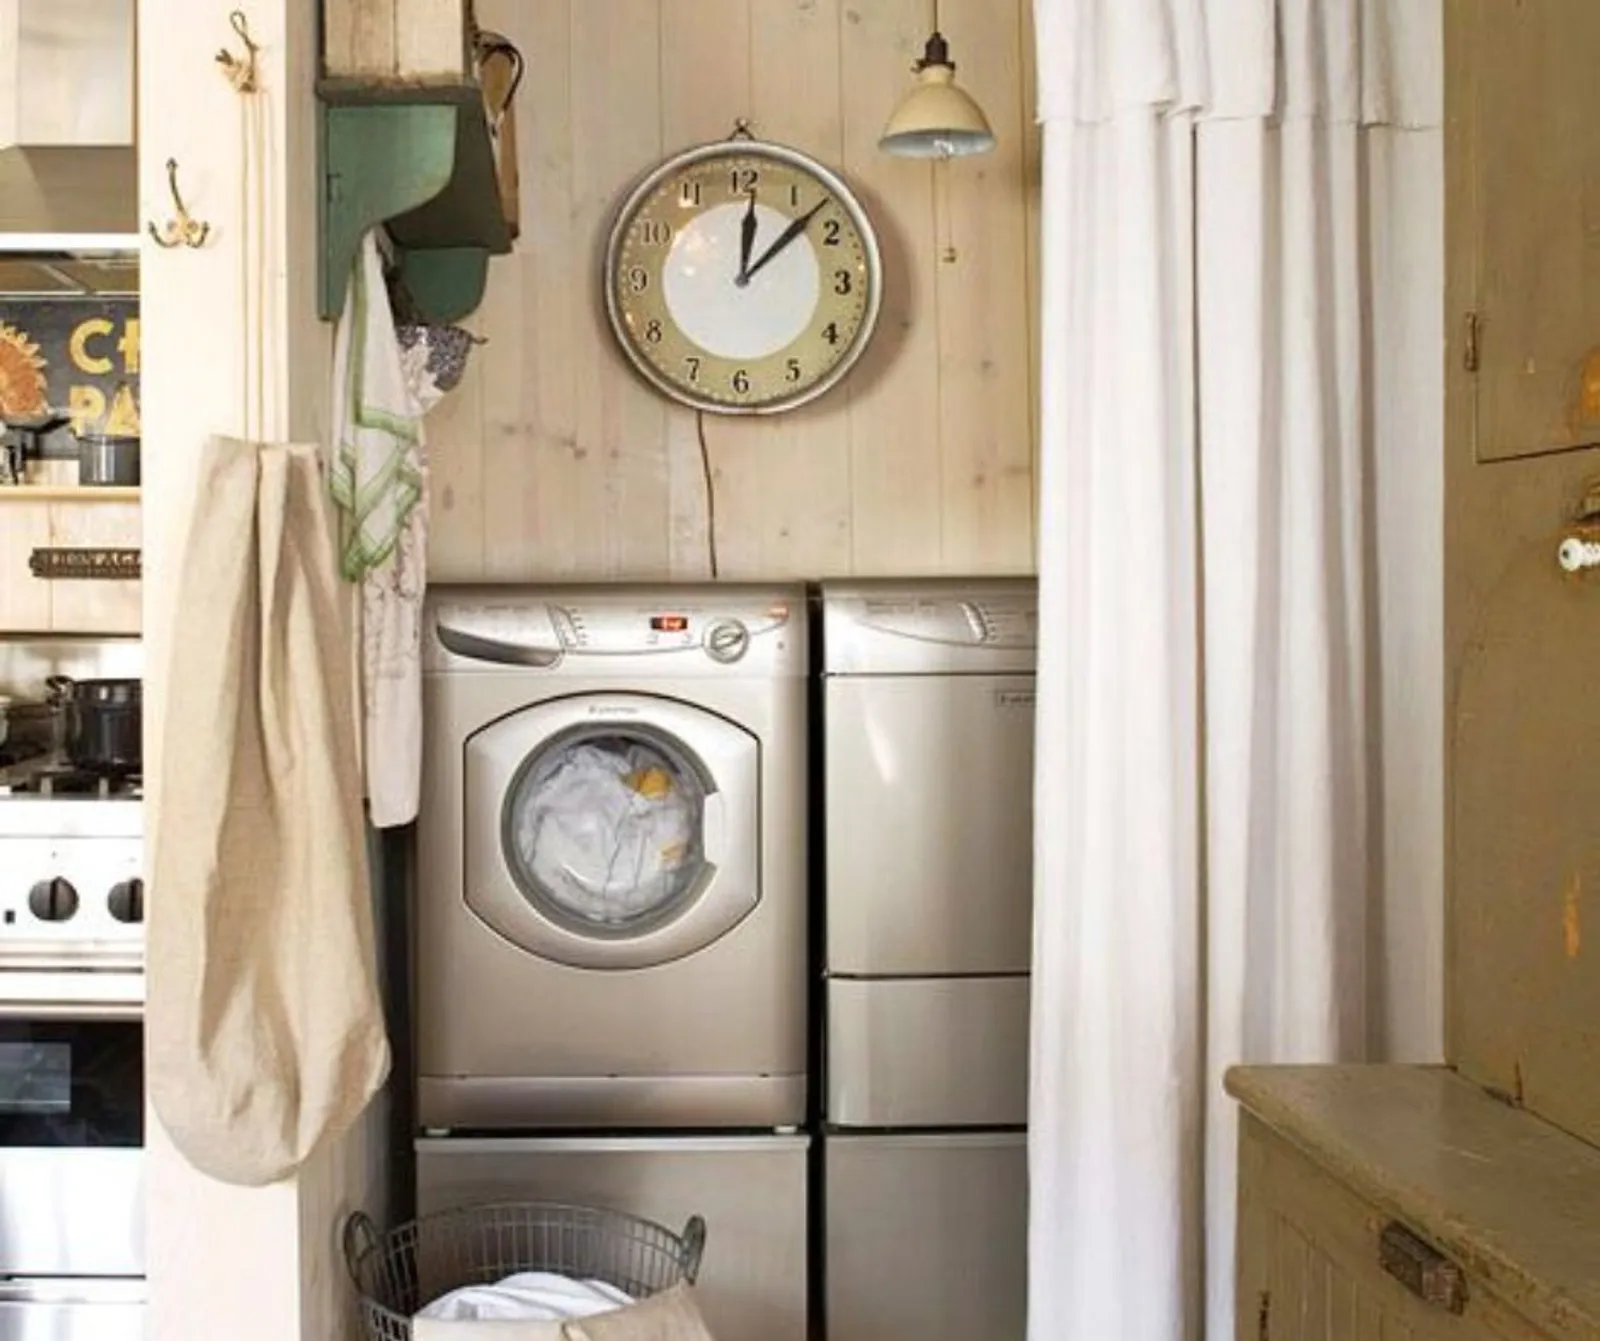 5 Ide Dekor & Tata Letak Dapur yang Menyatu dengan Ruang Cuci